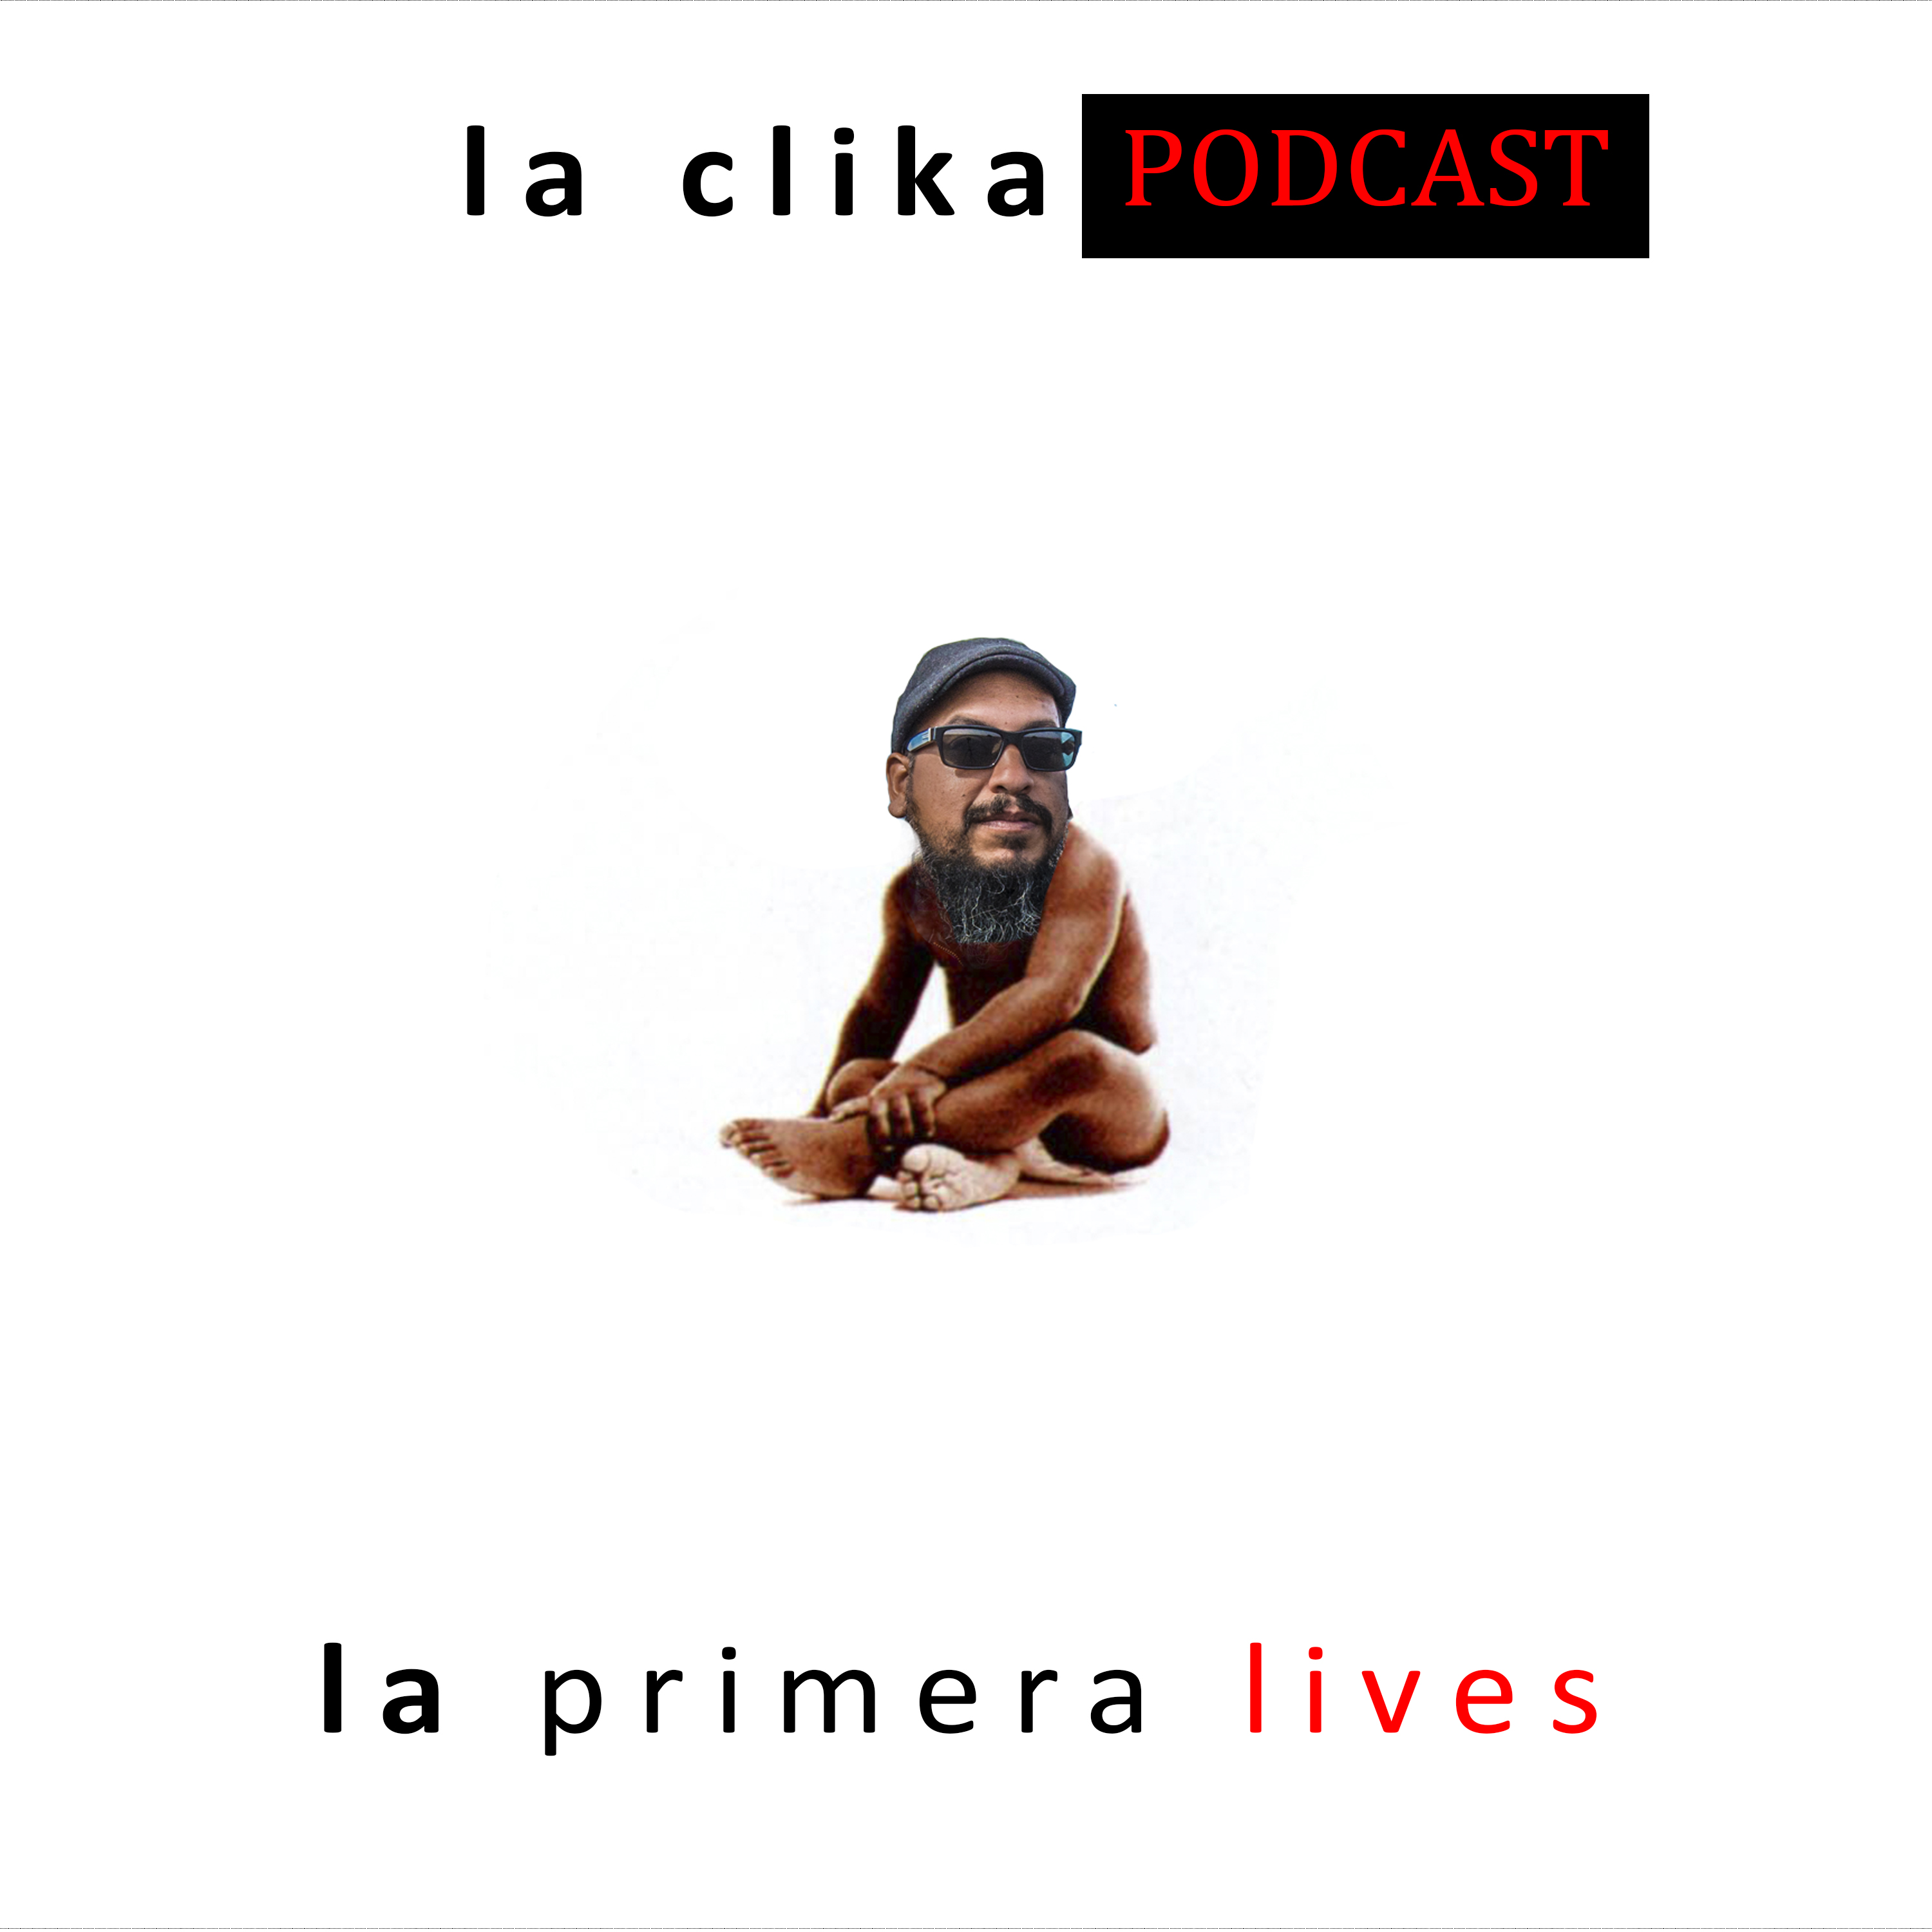 La Clika Hip Hop Podcast with Landon